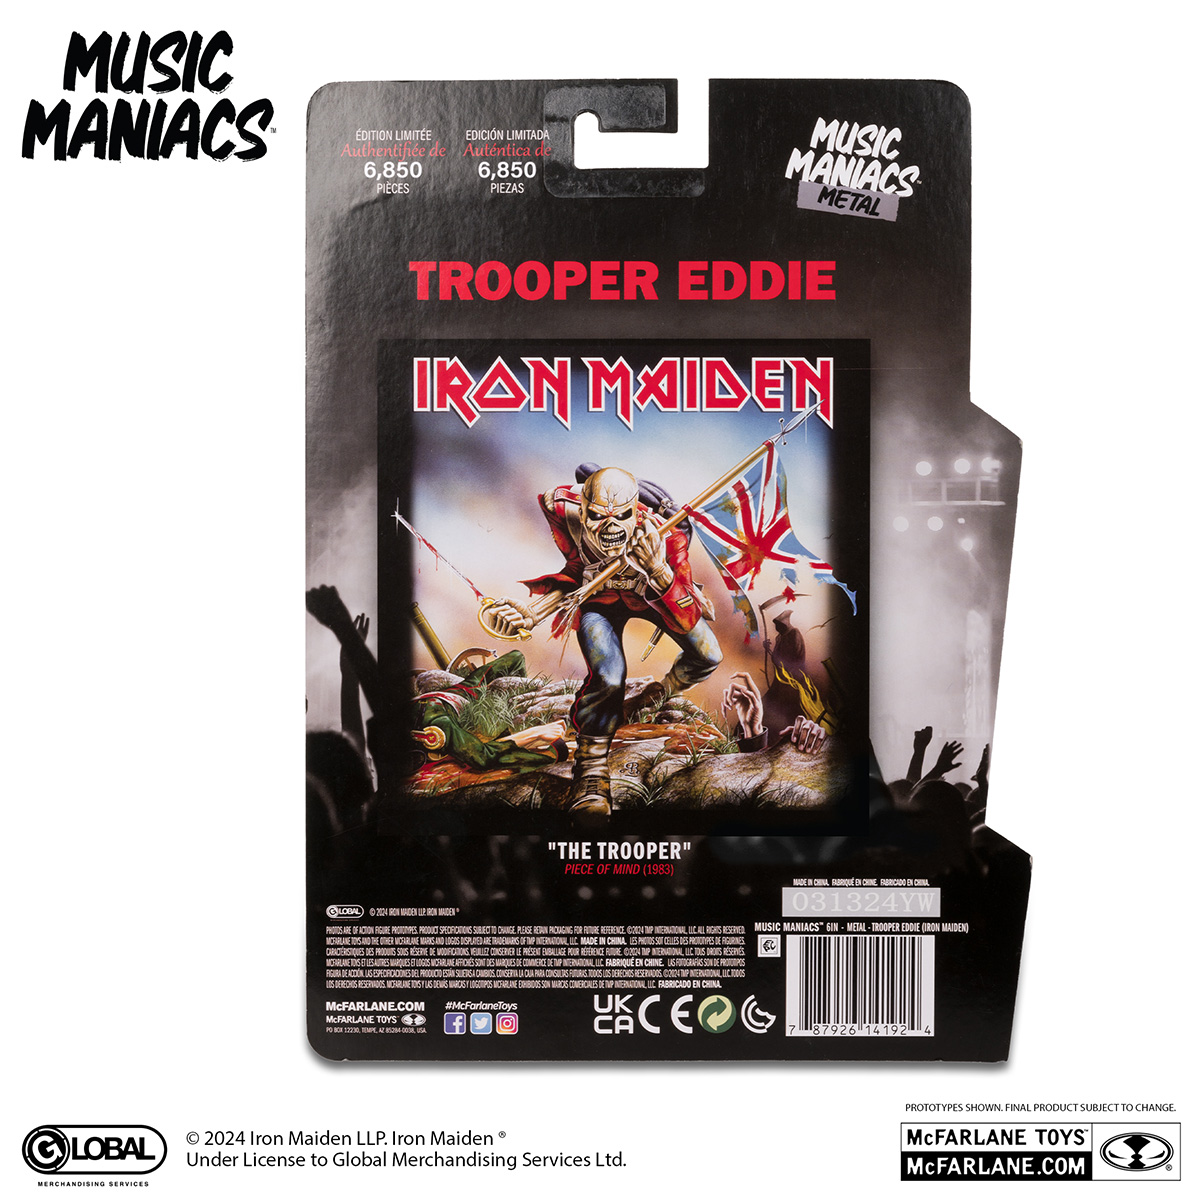 Action Figures Rob Zombie e Trooper Eddie (Iron Maiden) Music Maniacs Metal